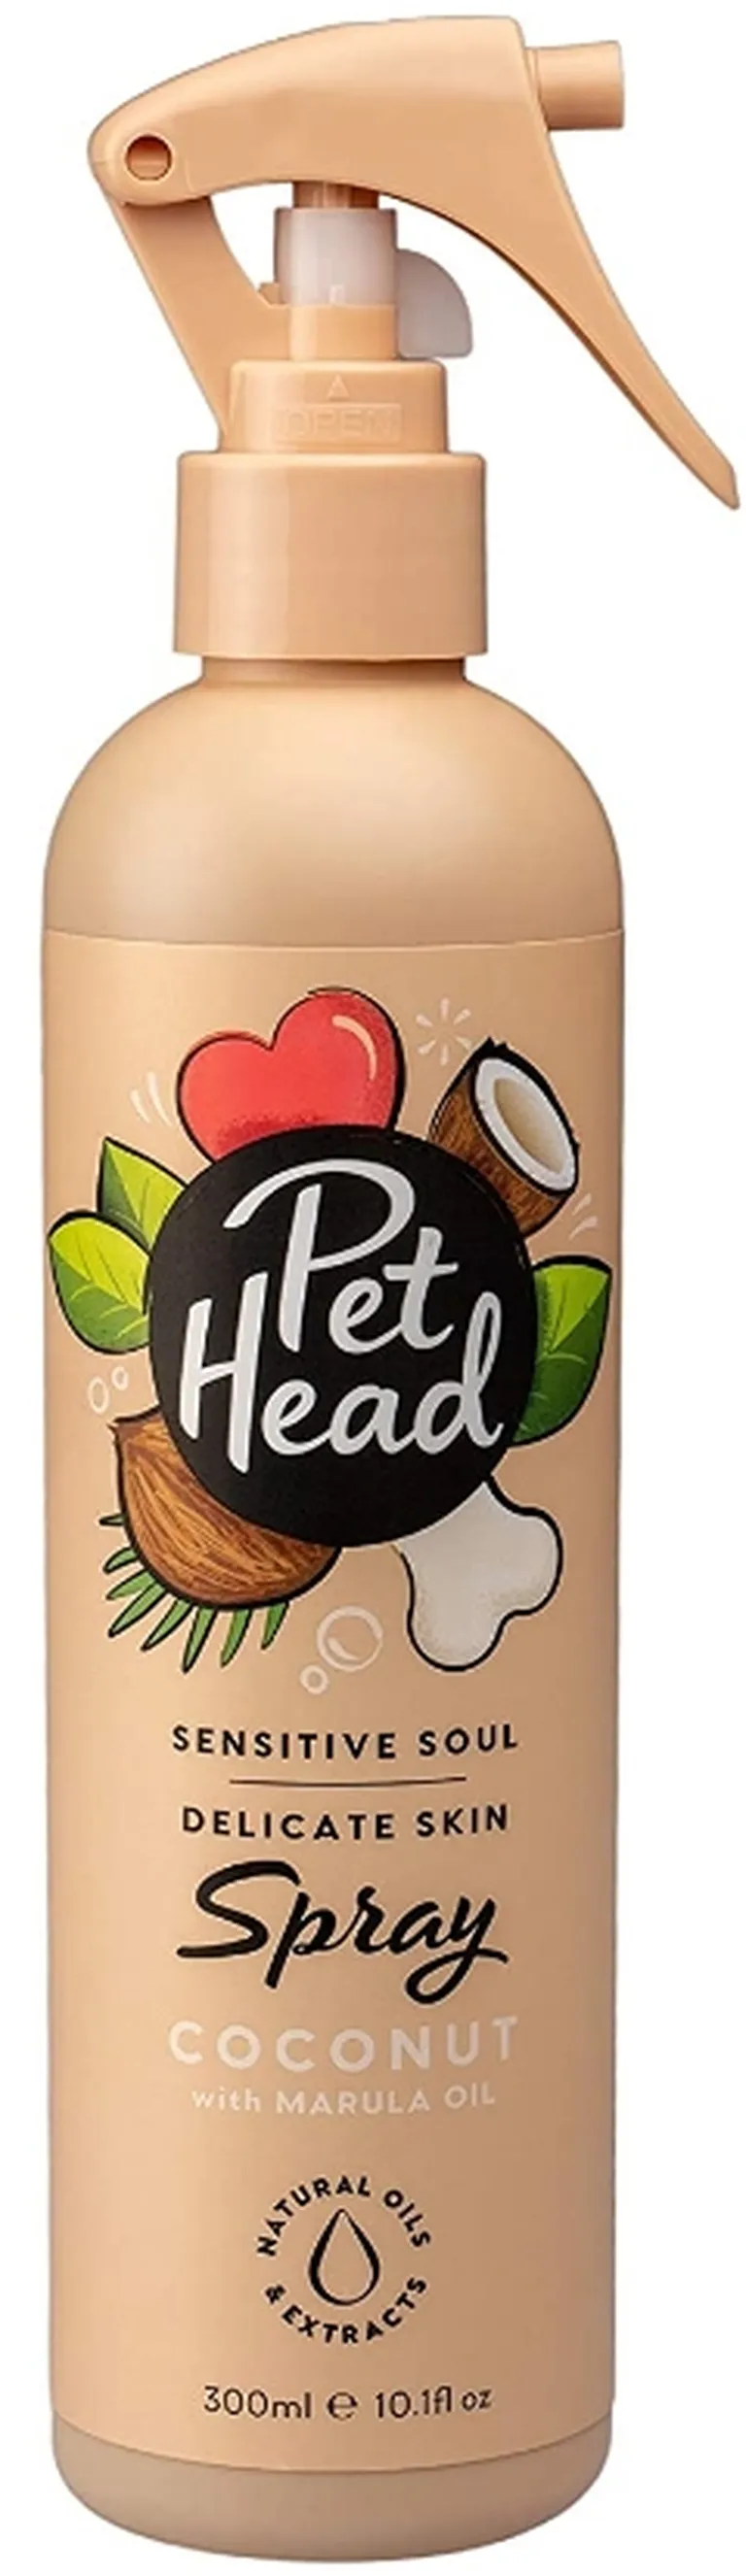 Pet Head Sensitive Soul Delicate Skin Spray for Dogs Coconut with Marula Oil Photo 1